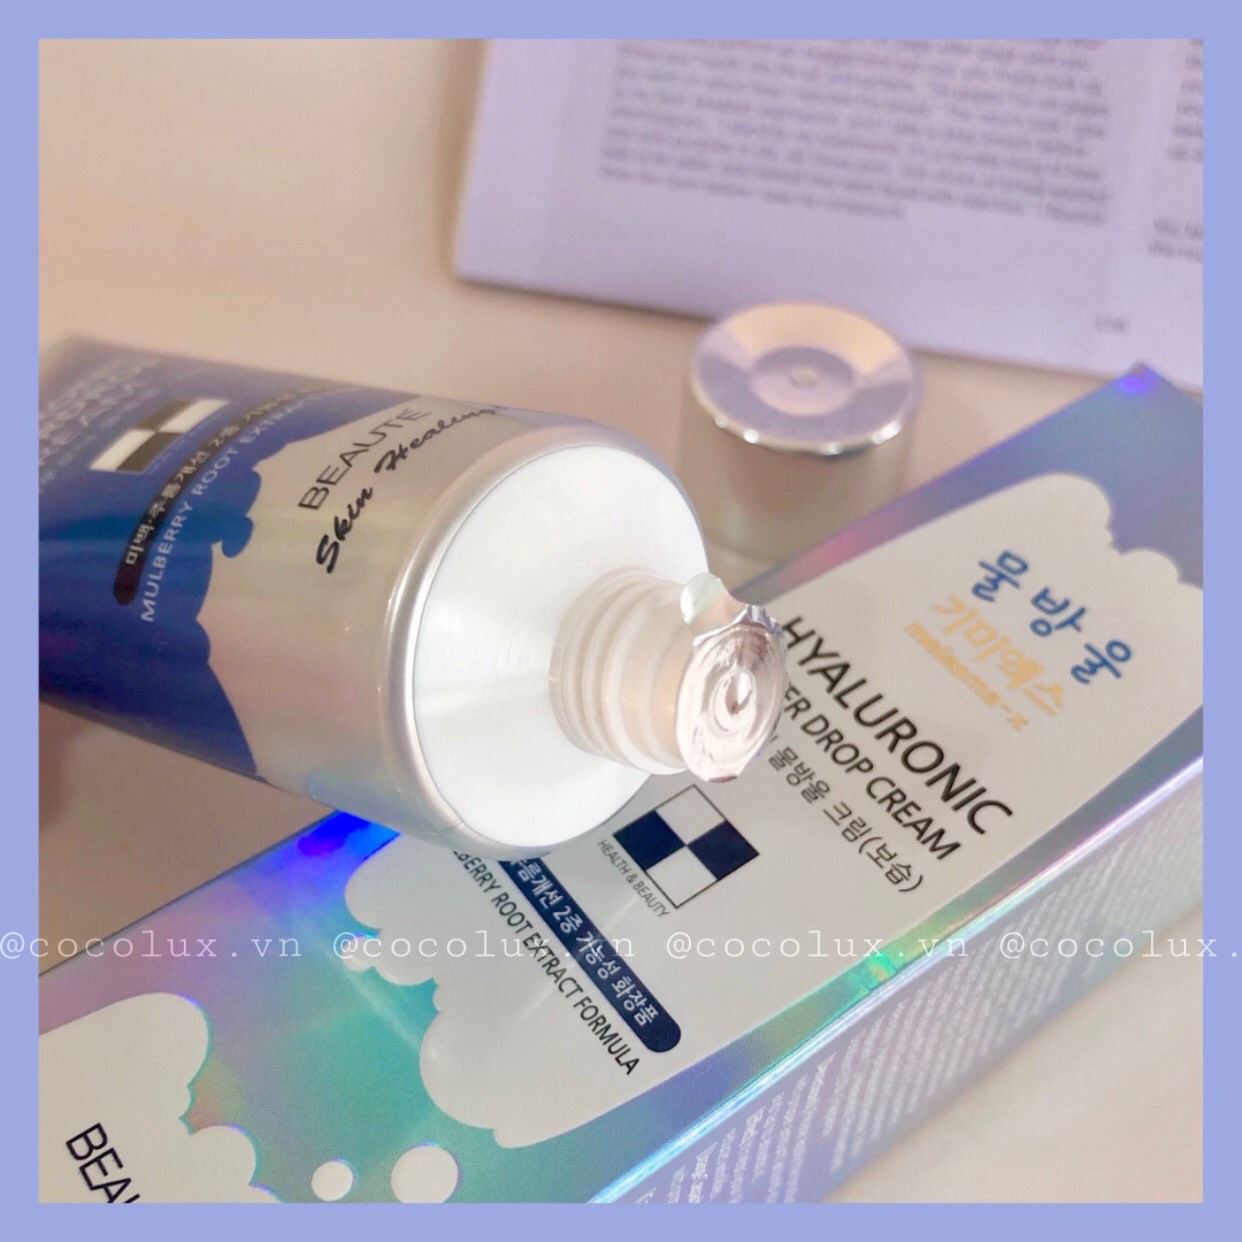 Kem Dưỡng Melasma-X Hyaluronic WaterDrop Cream 80ml